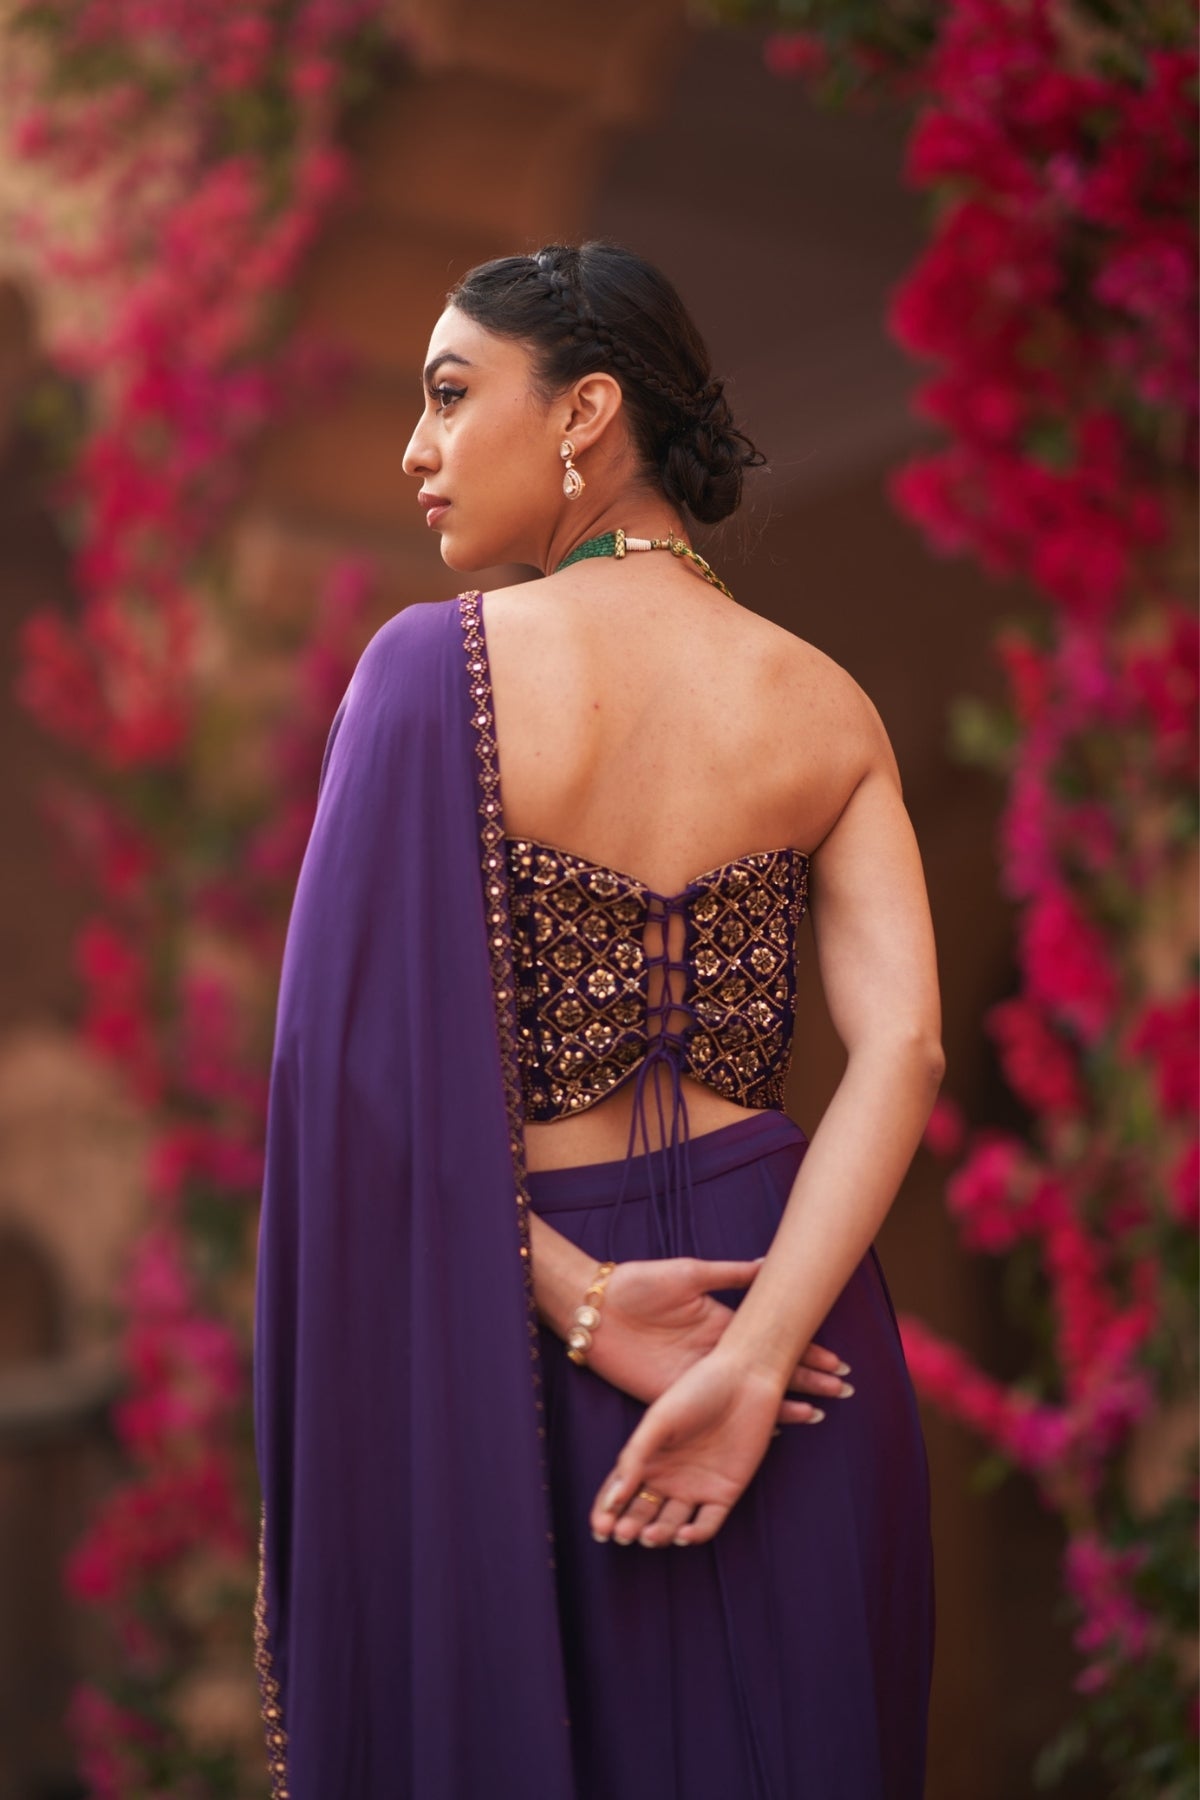 The Jamini saree with corset